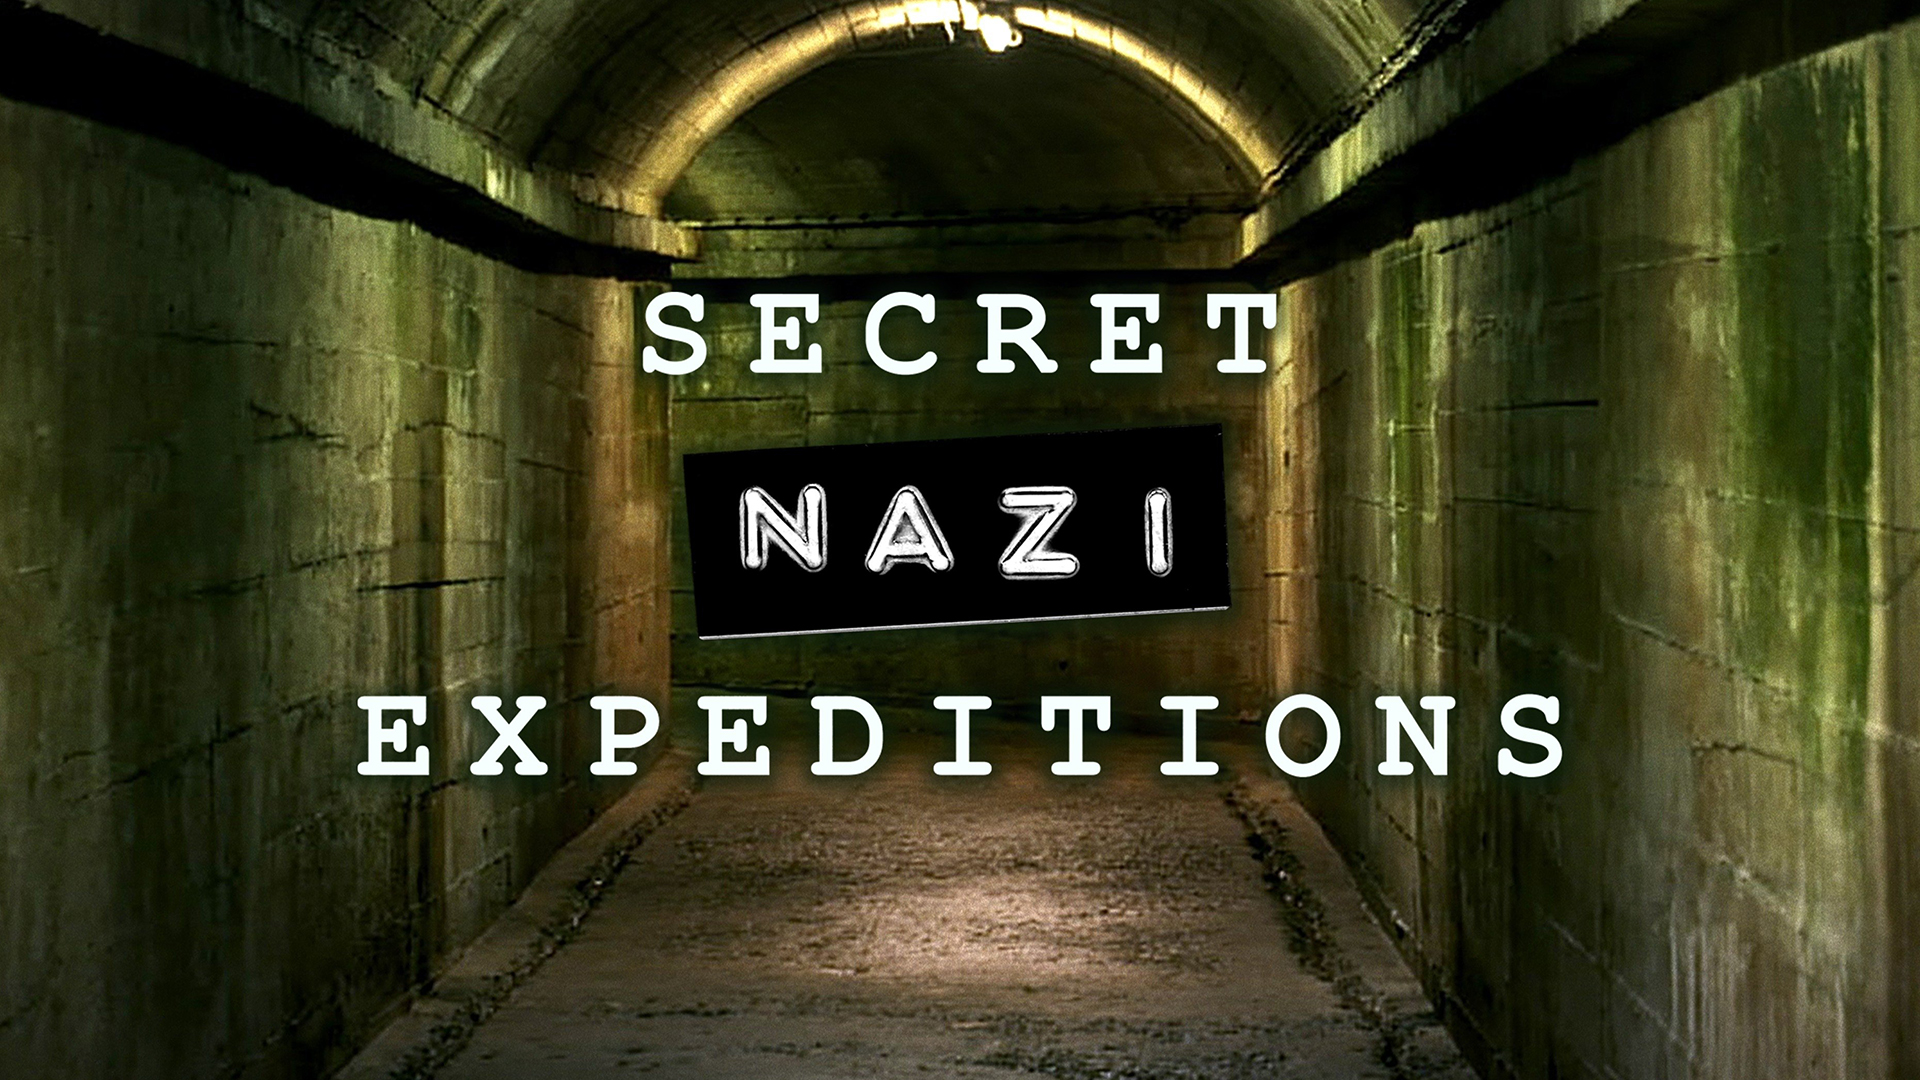 Watch Secret Nazi Expeditions - Season 1